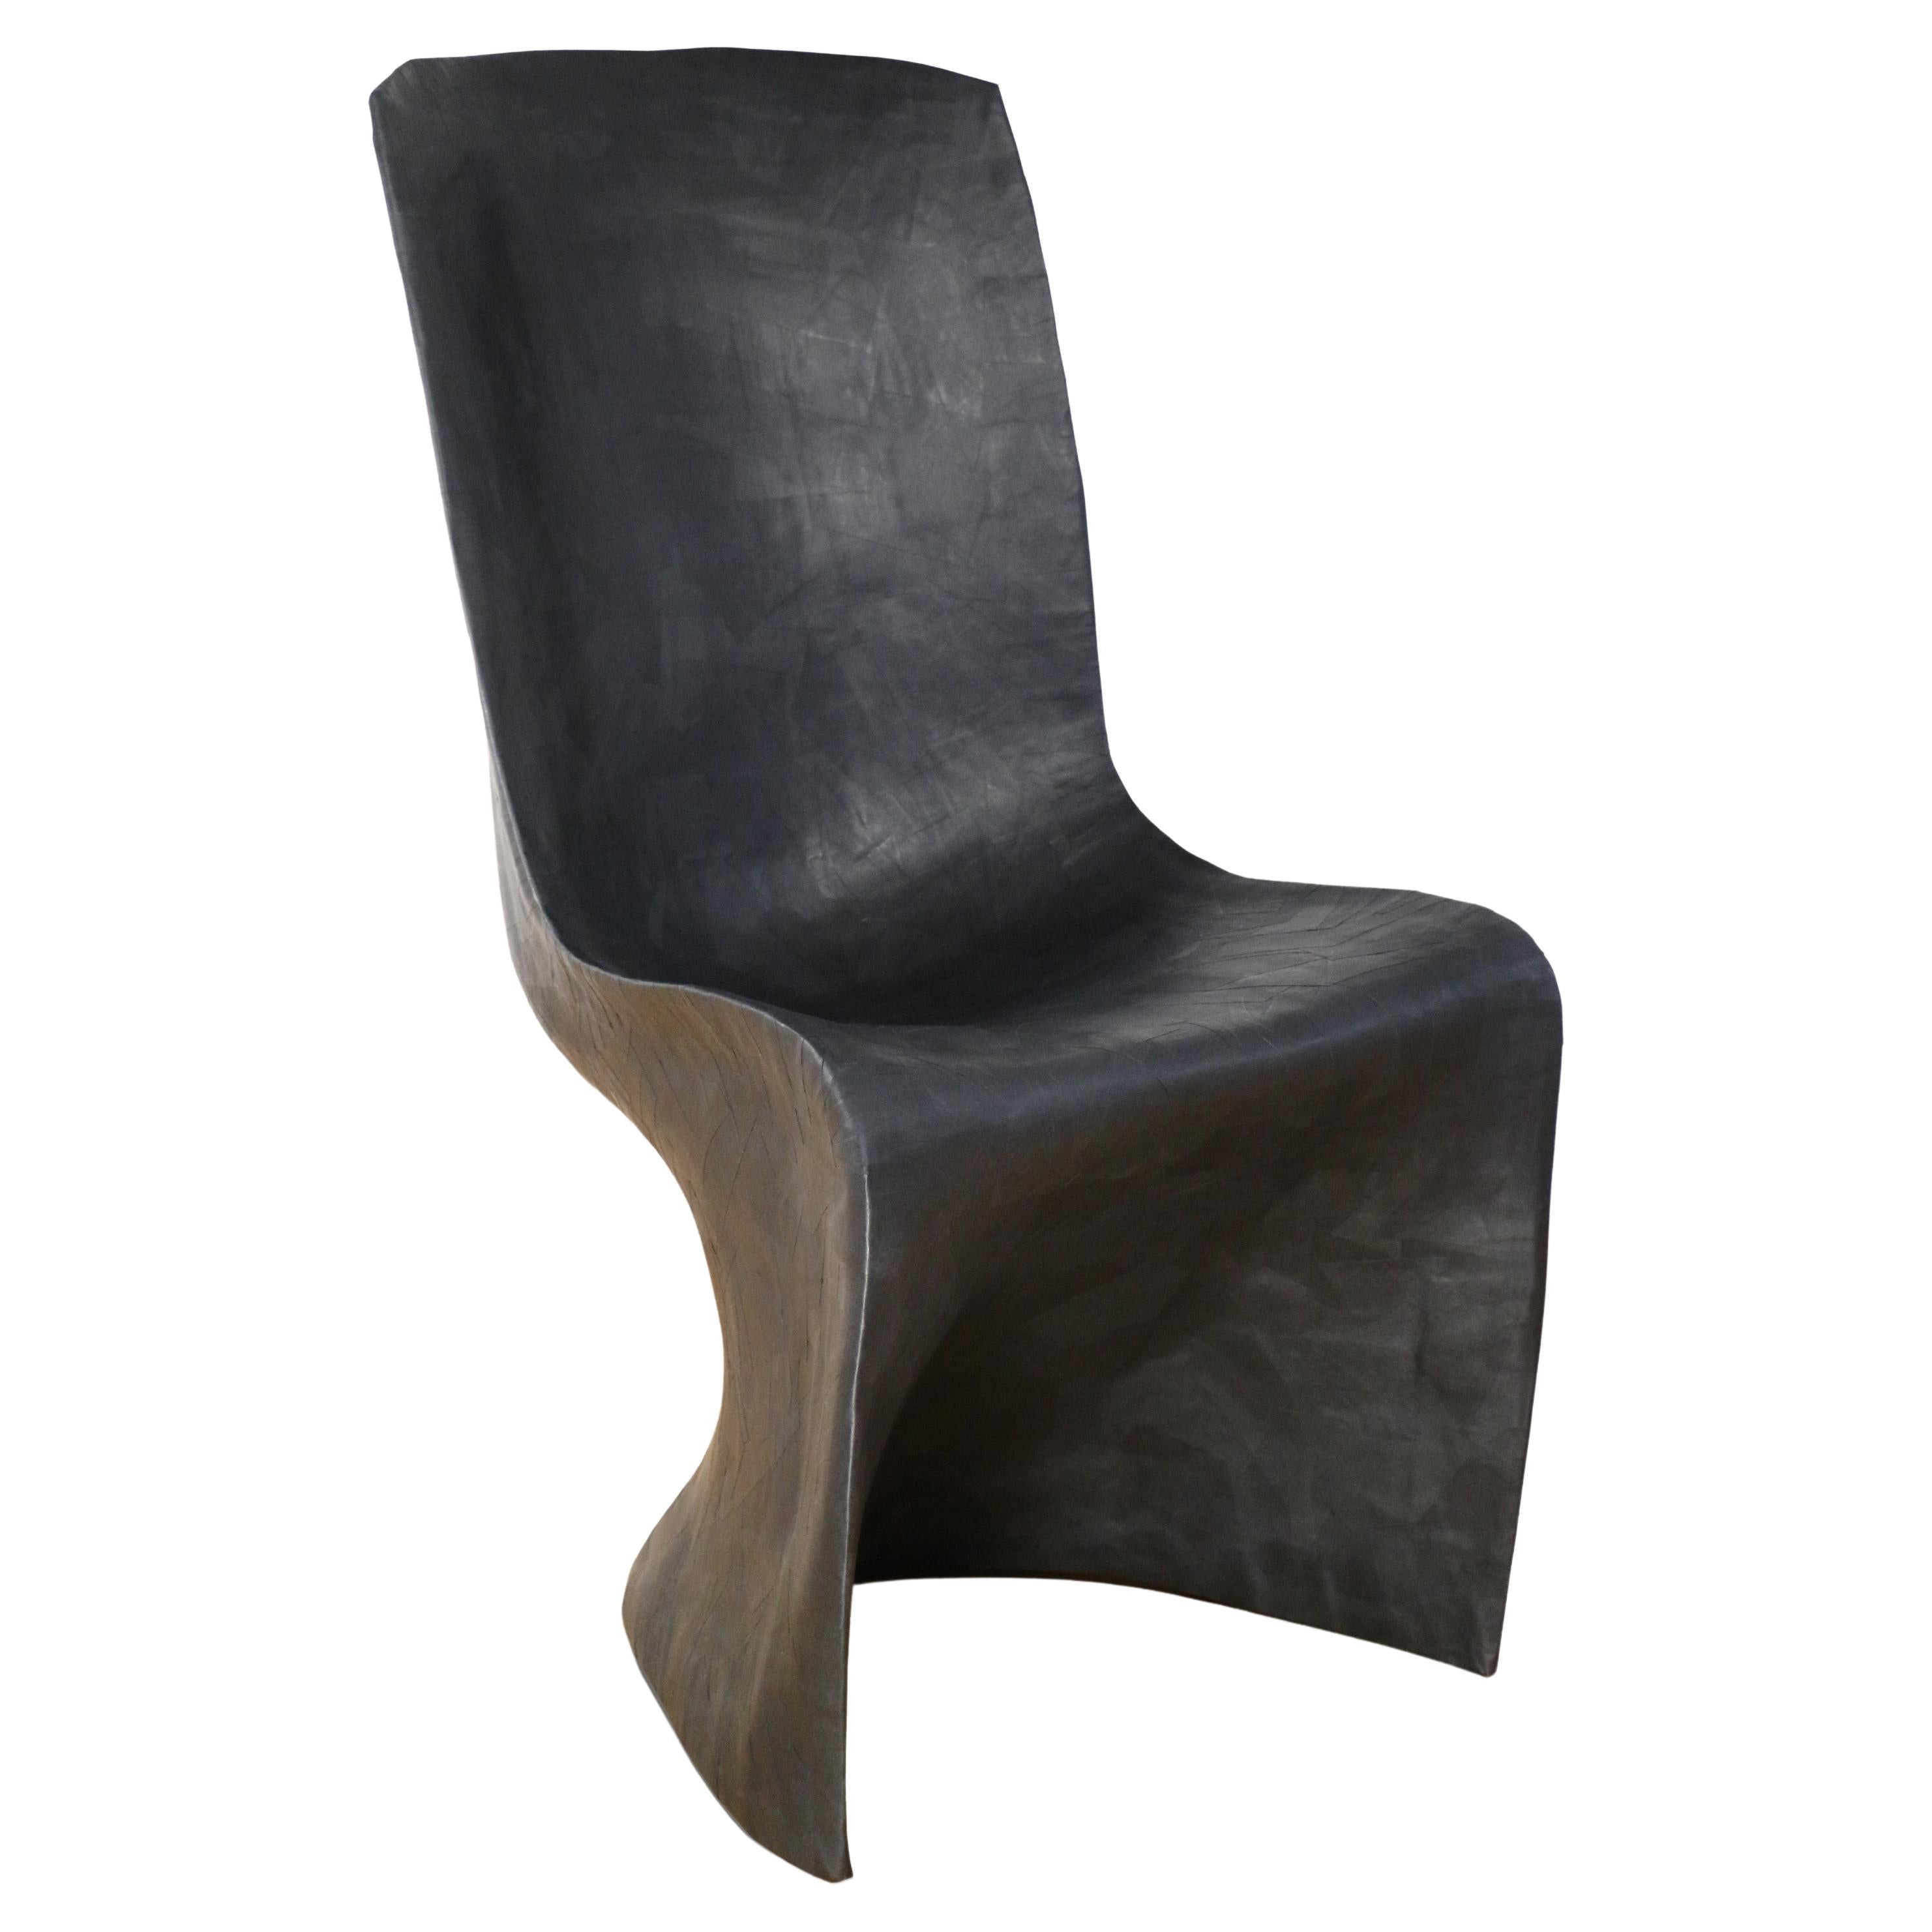 Collectible Design Unique Black Paper Chair Black Lotus by Vadim Kibardin For Sale